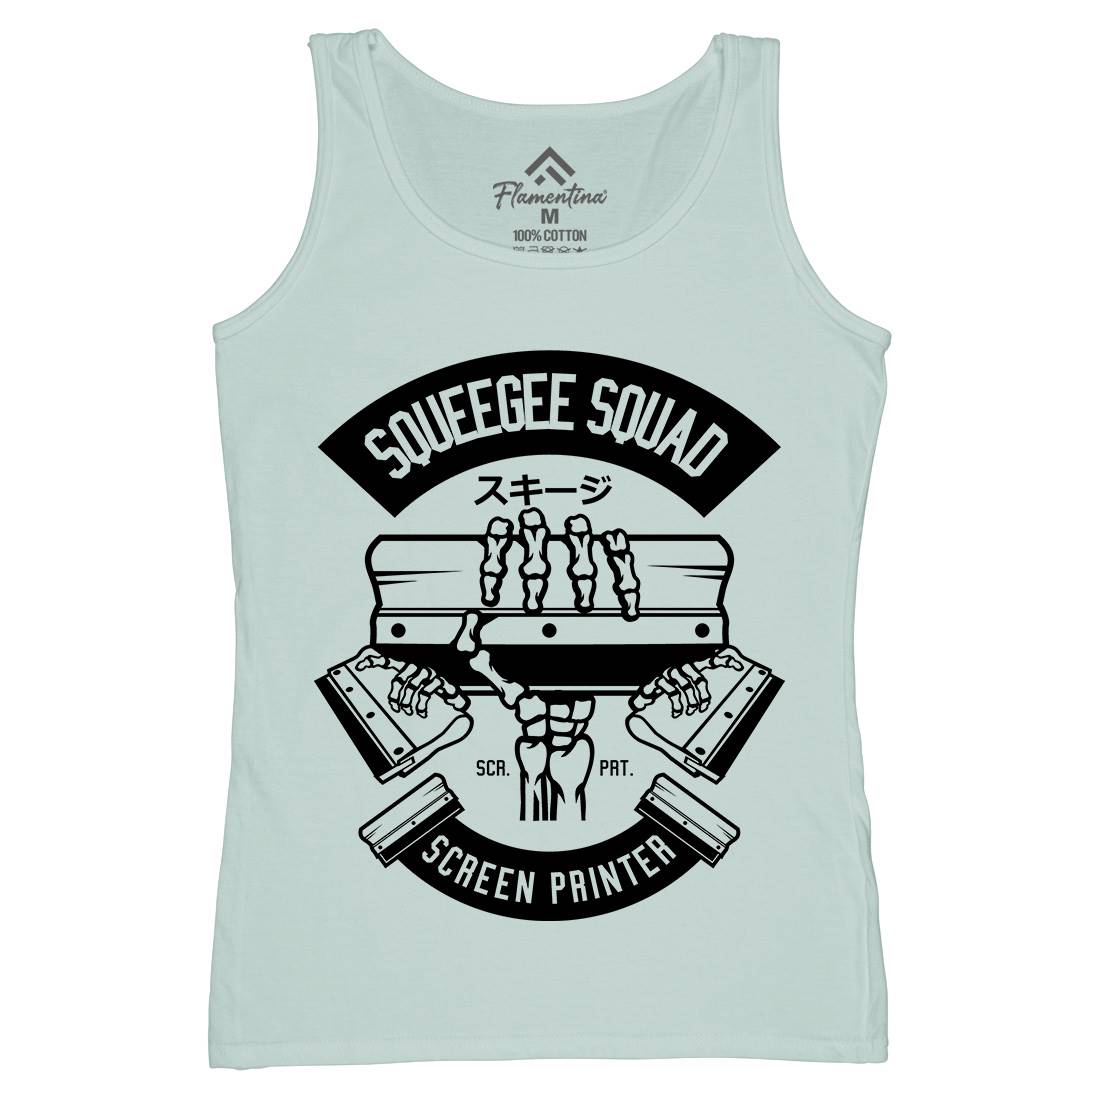 Squeegee Squad Womens Organic Tank Top Vest Retro B642